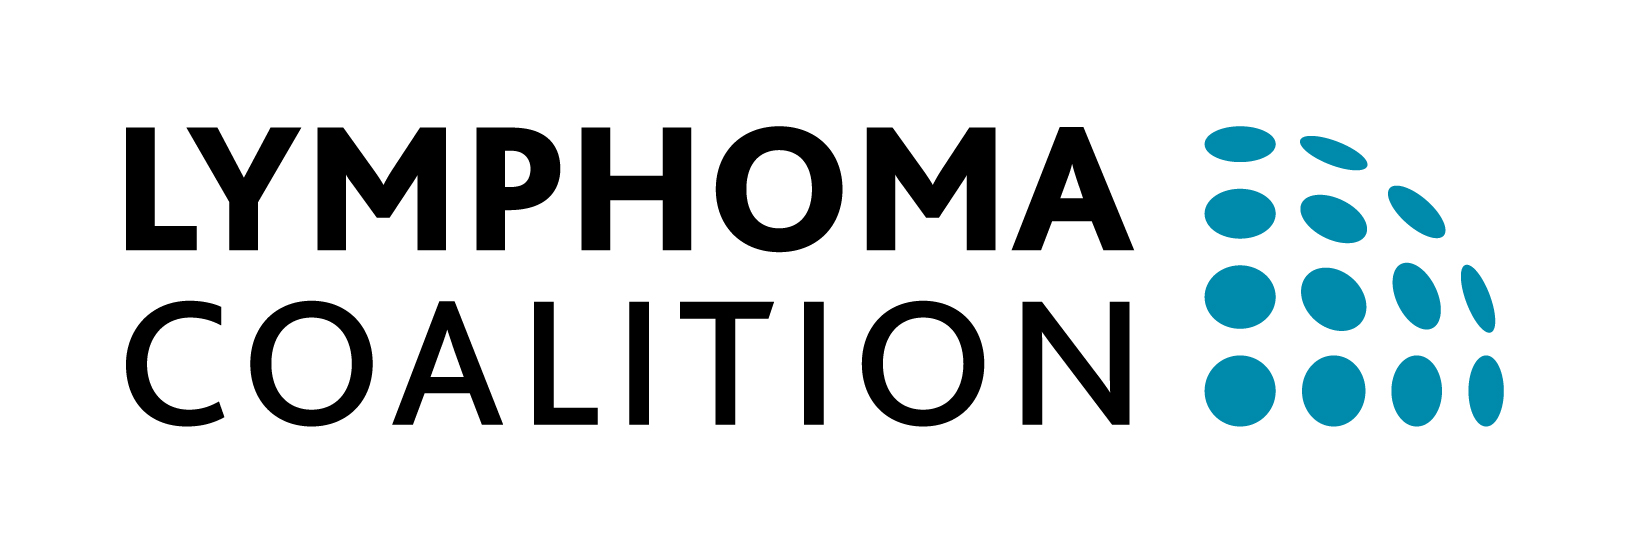 Lymphoma coalition